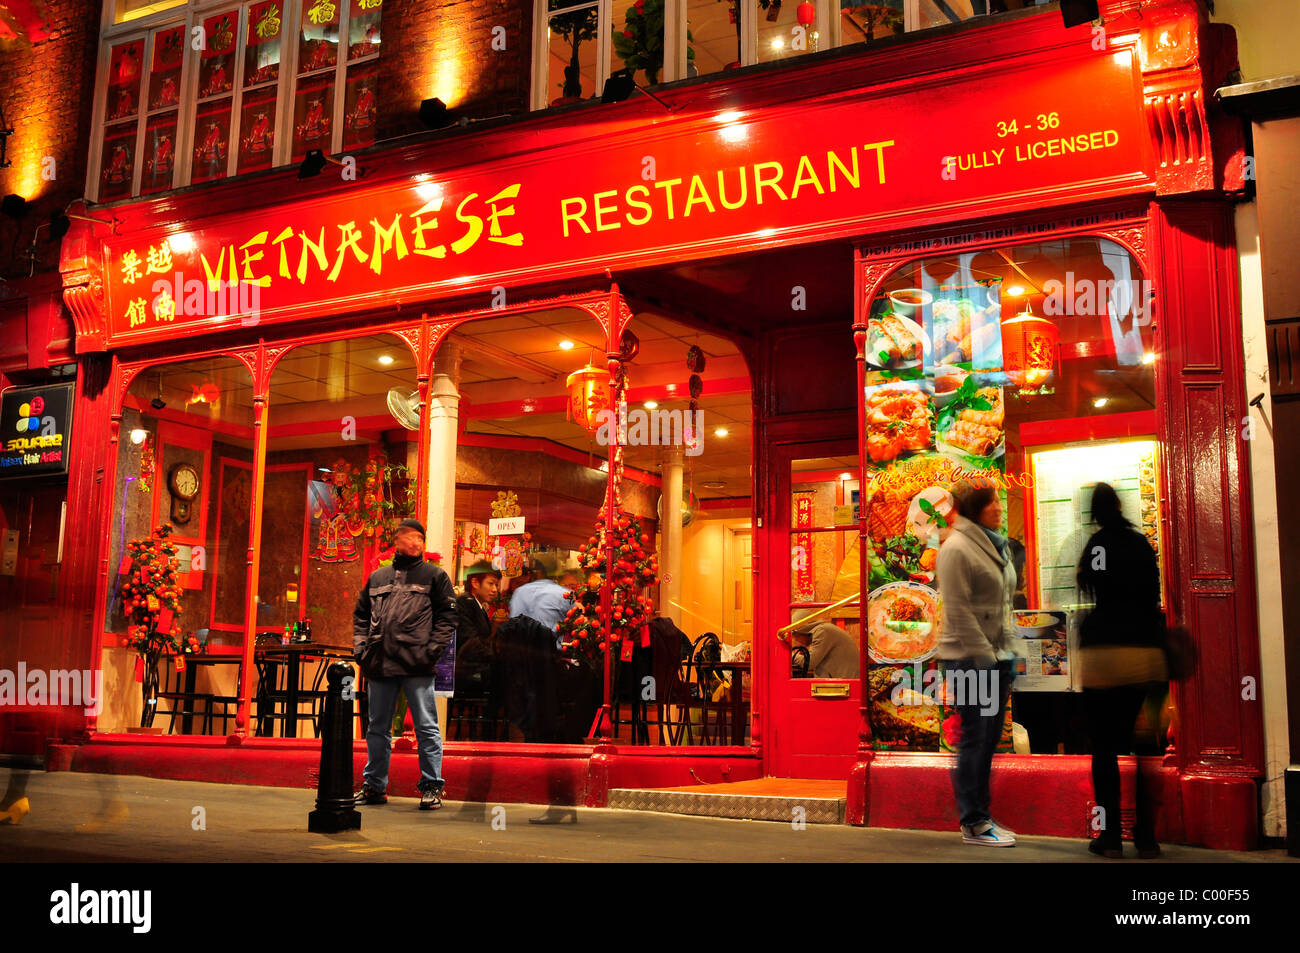 Vietnamese Restaurant in Soho, London Stock Photo